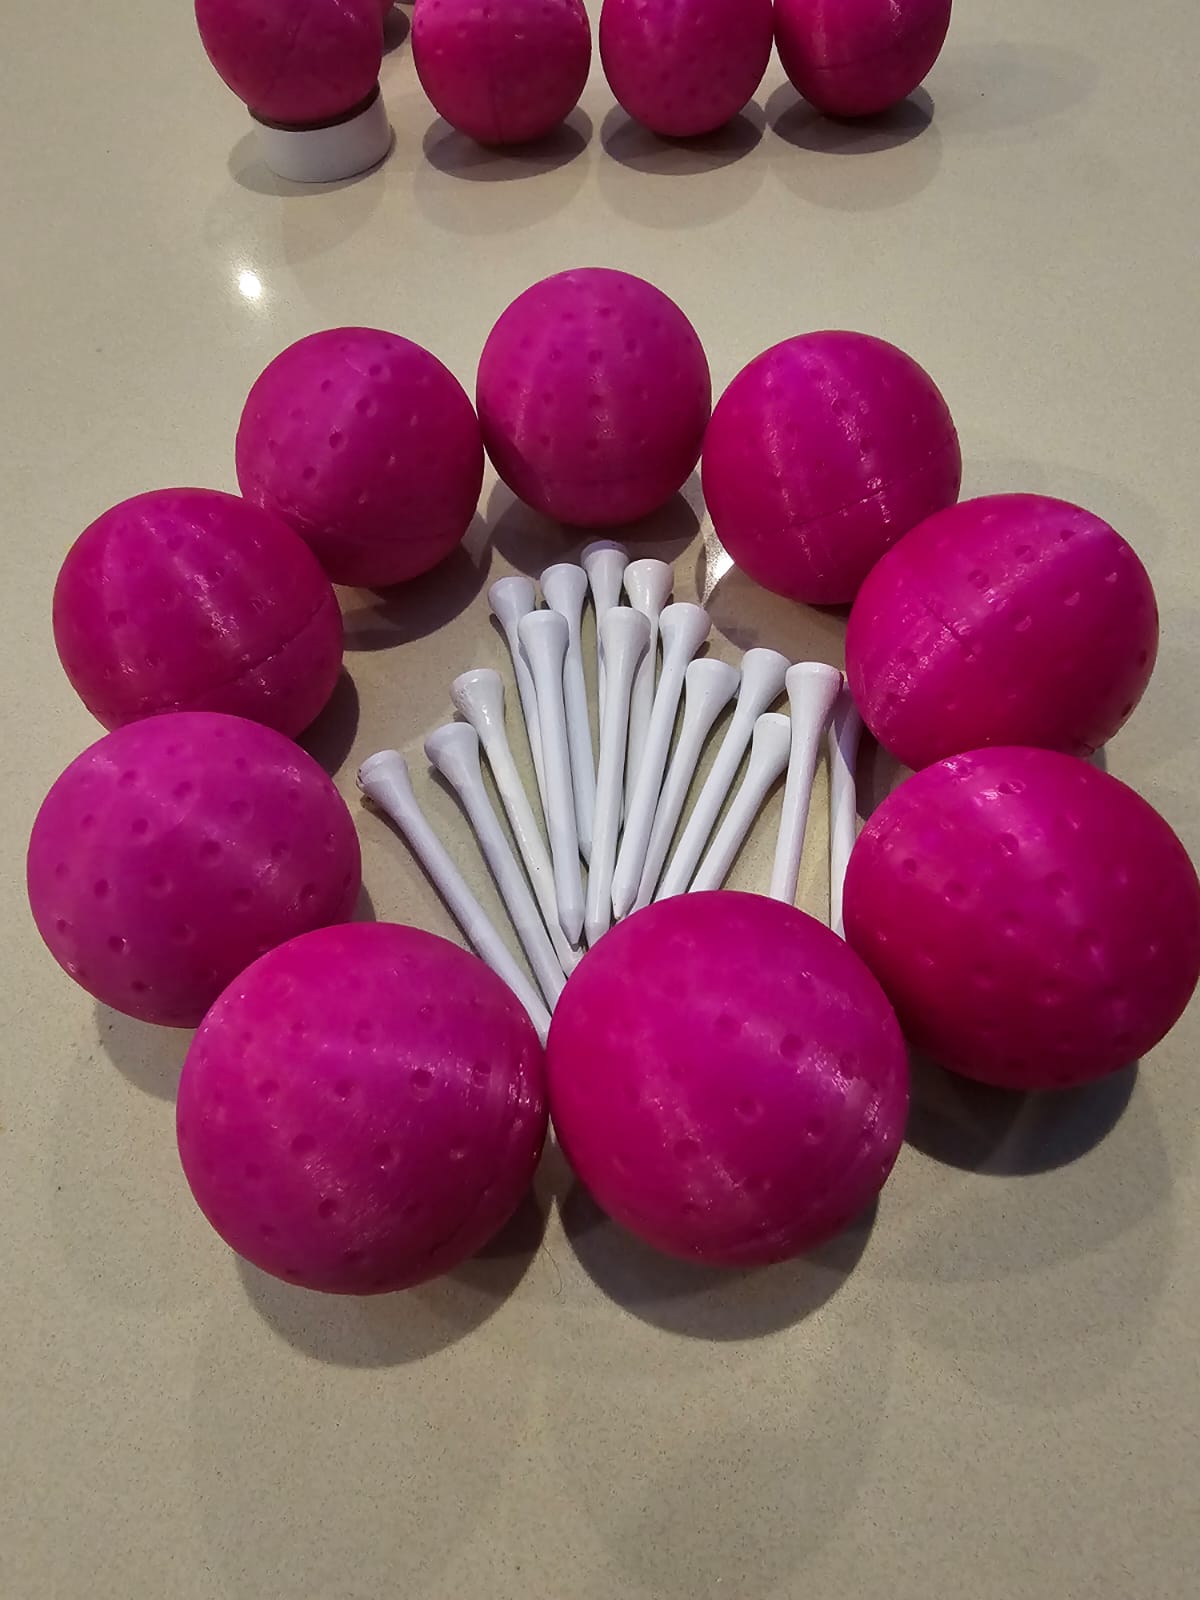 Pink golf balls filled with pink powder